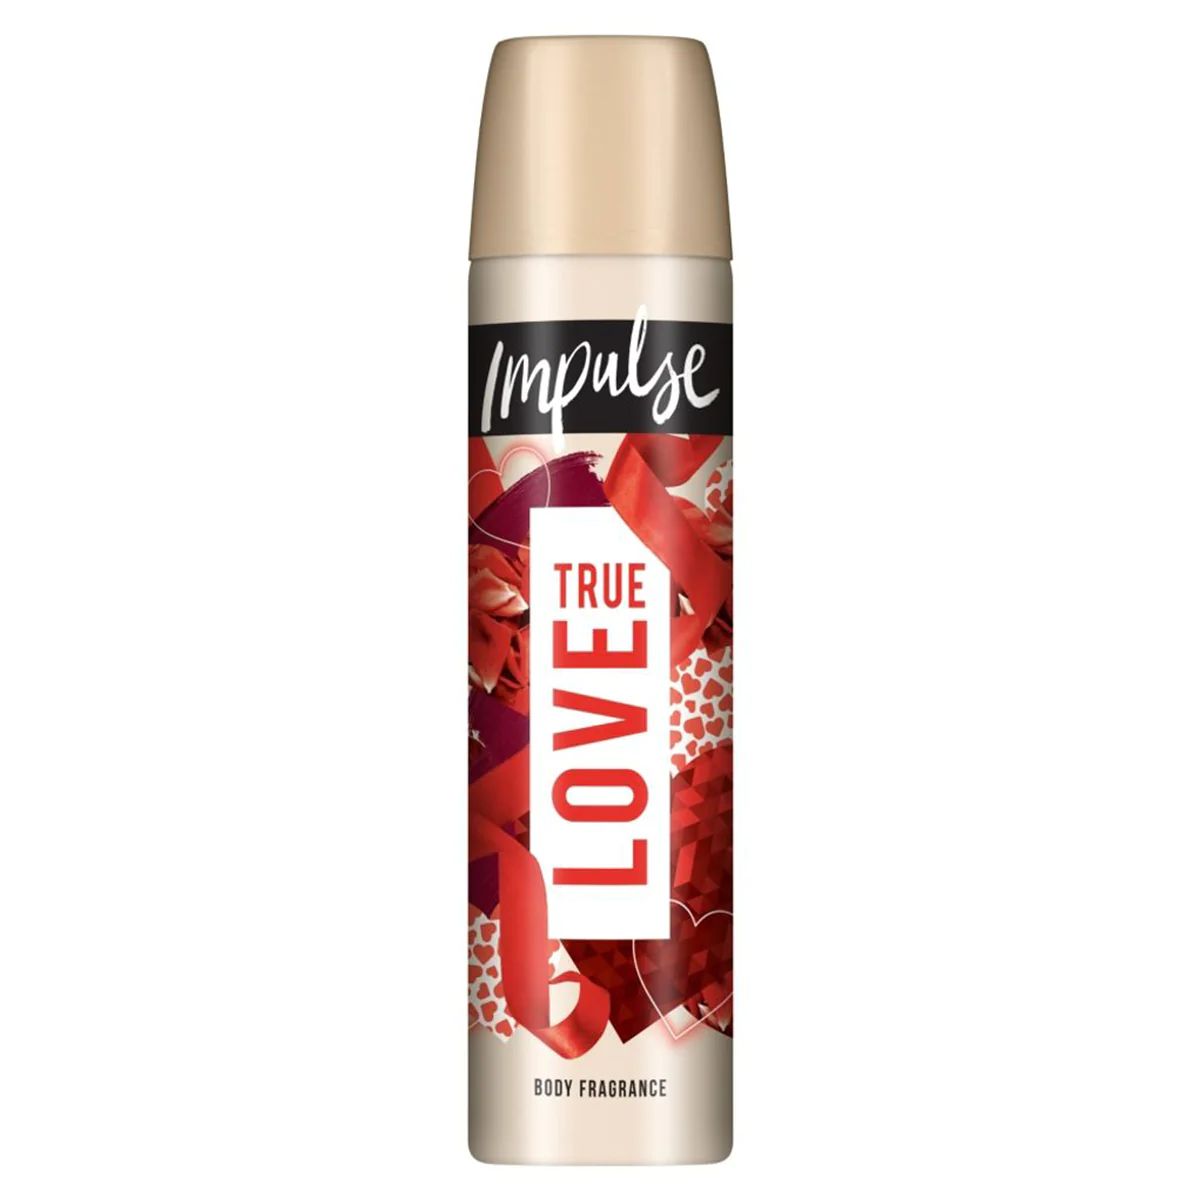 A can of True Love body spray deodorant.